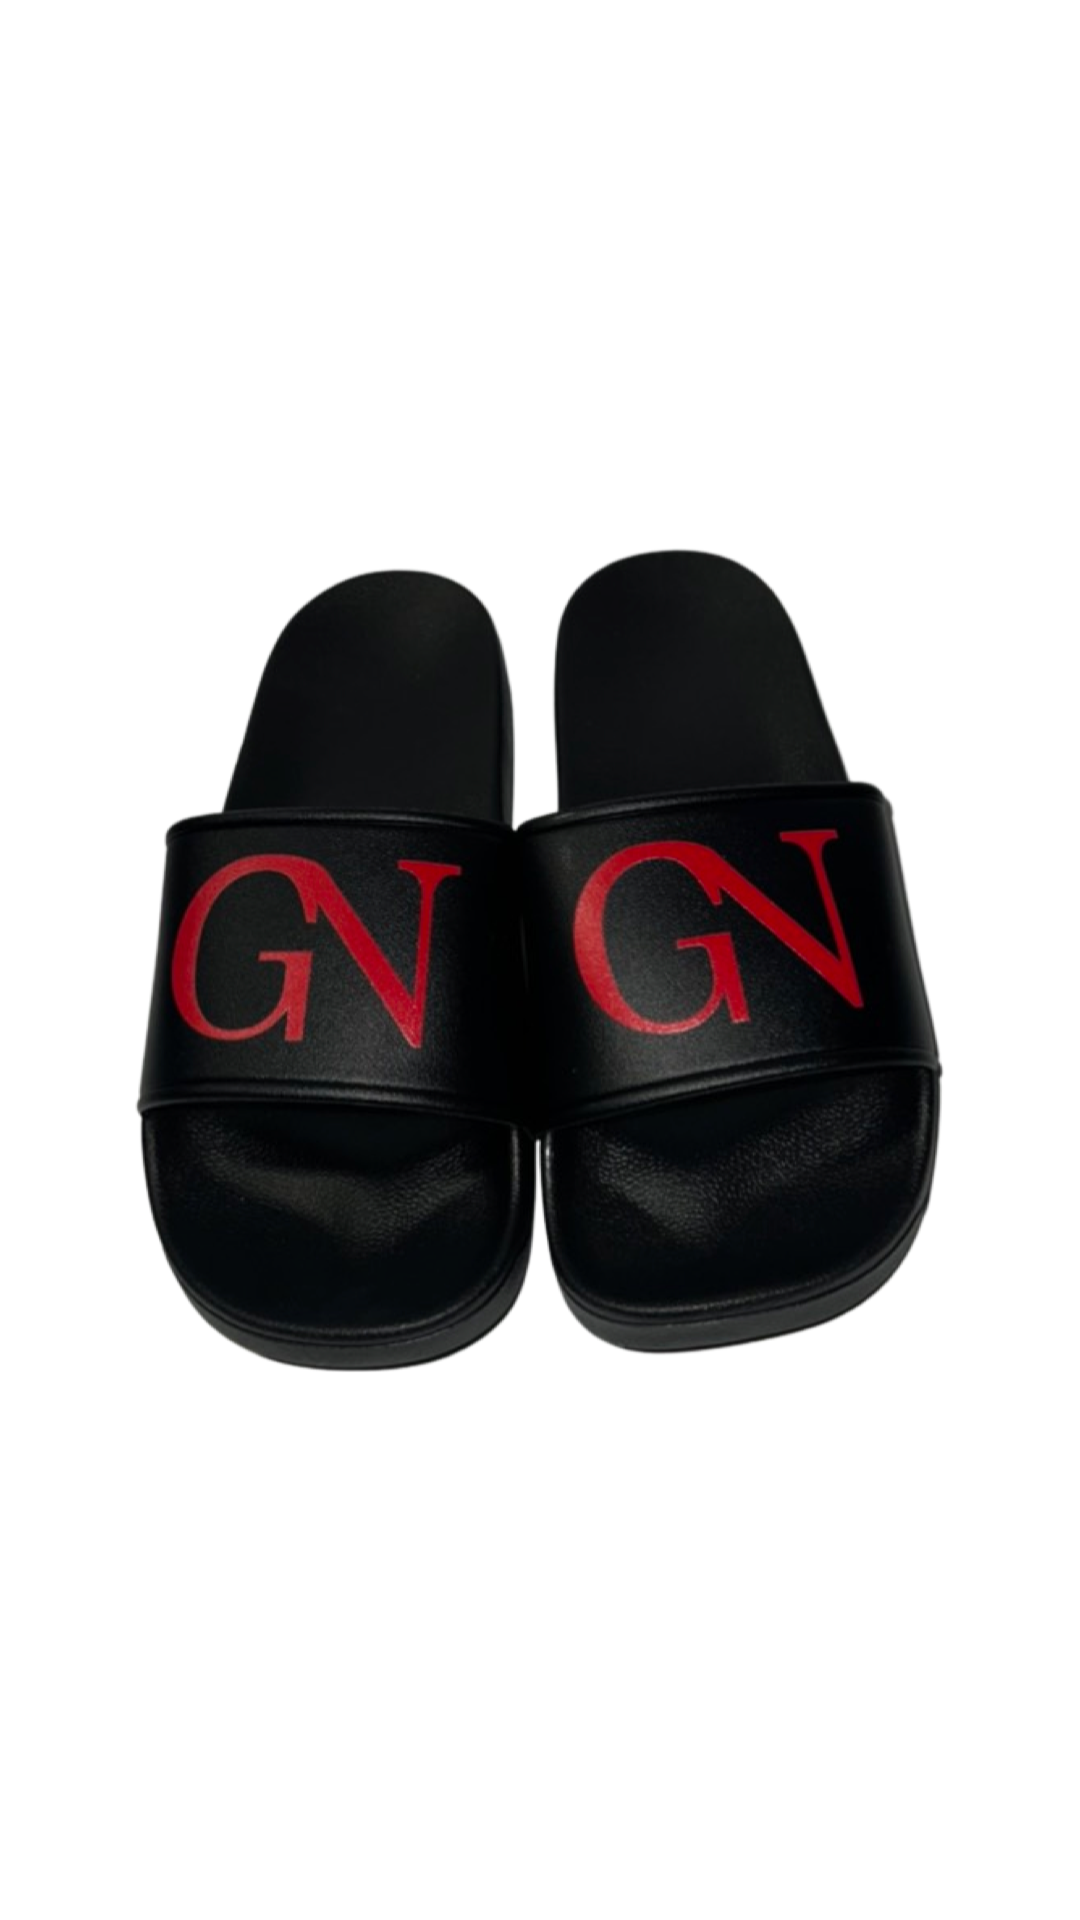 GN BLACK SLIDES/SLIPPERS  (UNISEX) Super comfortable